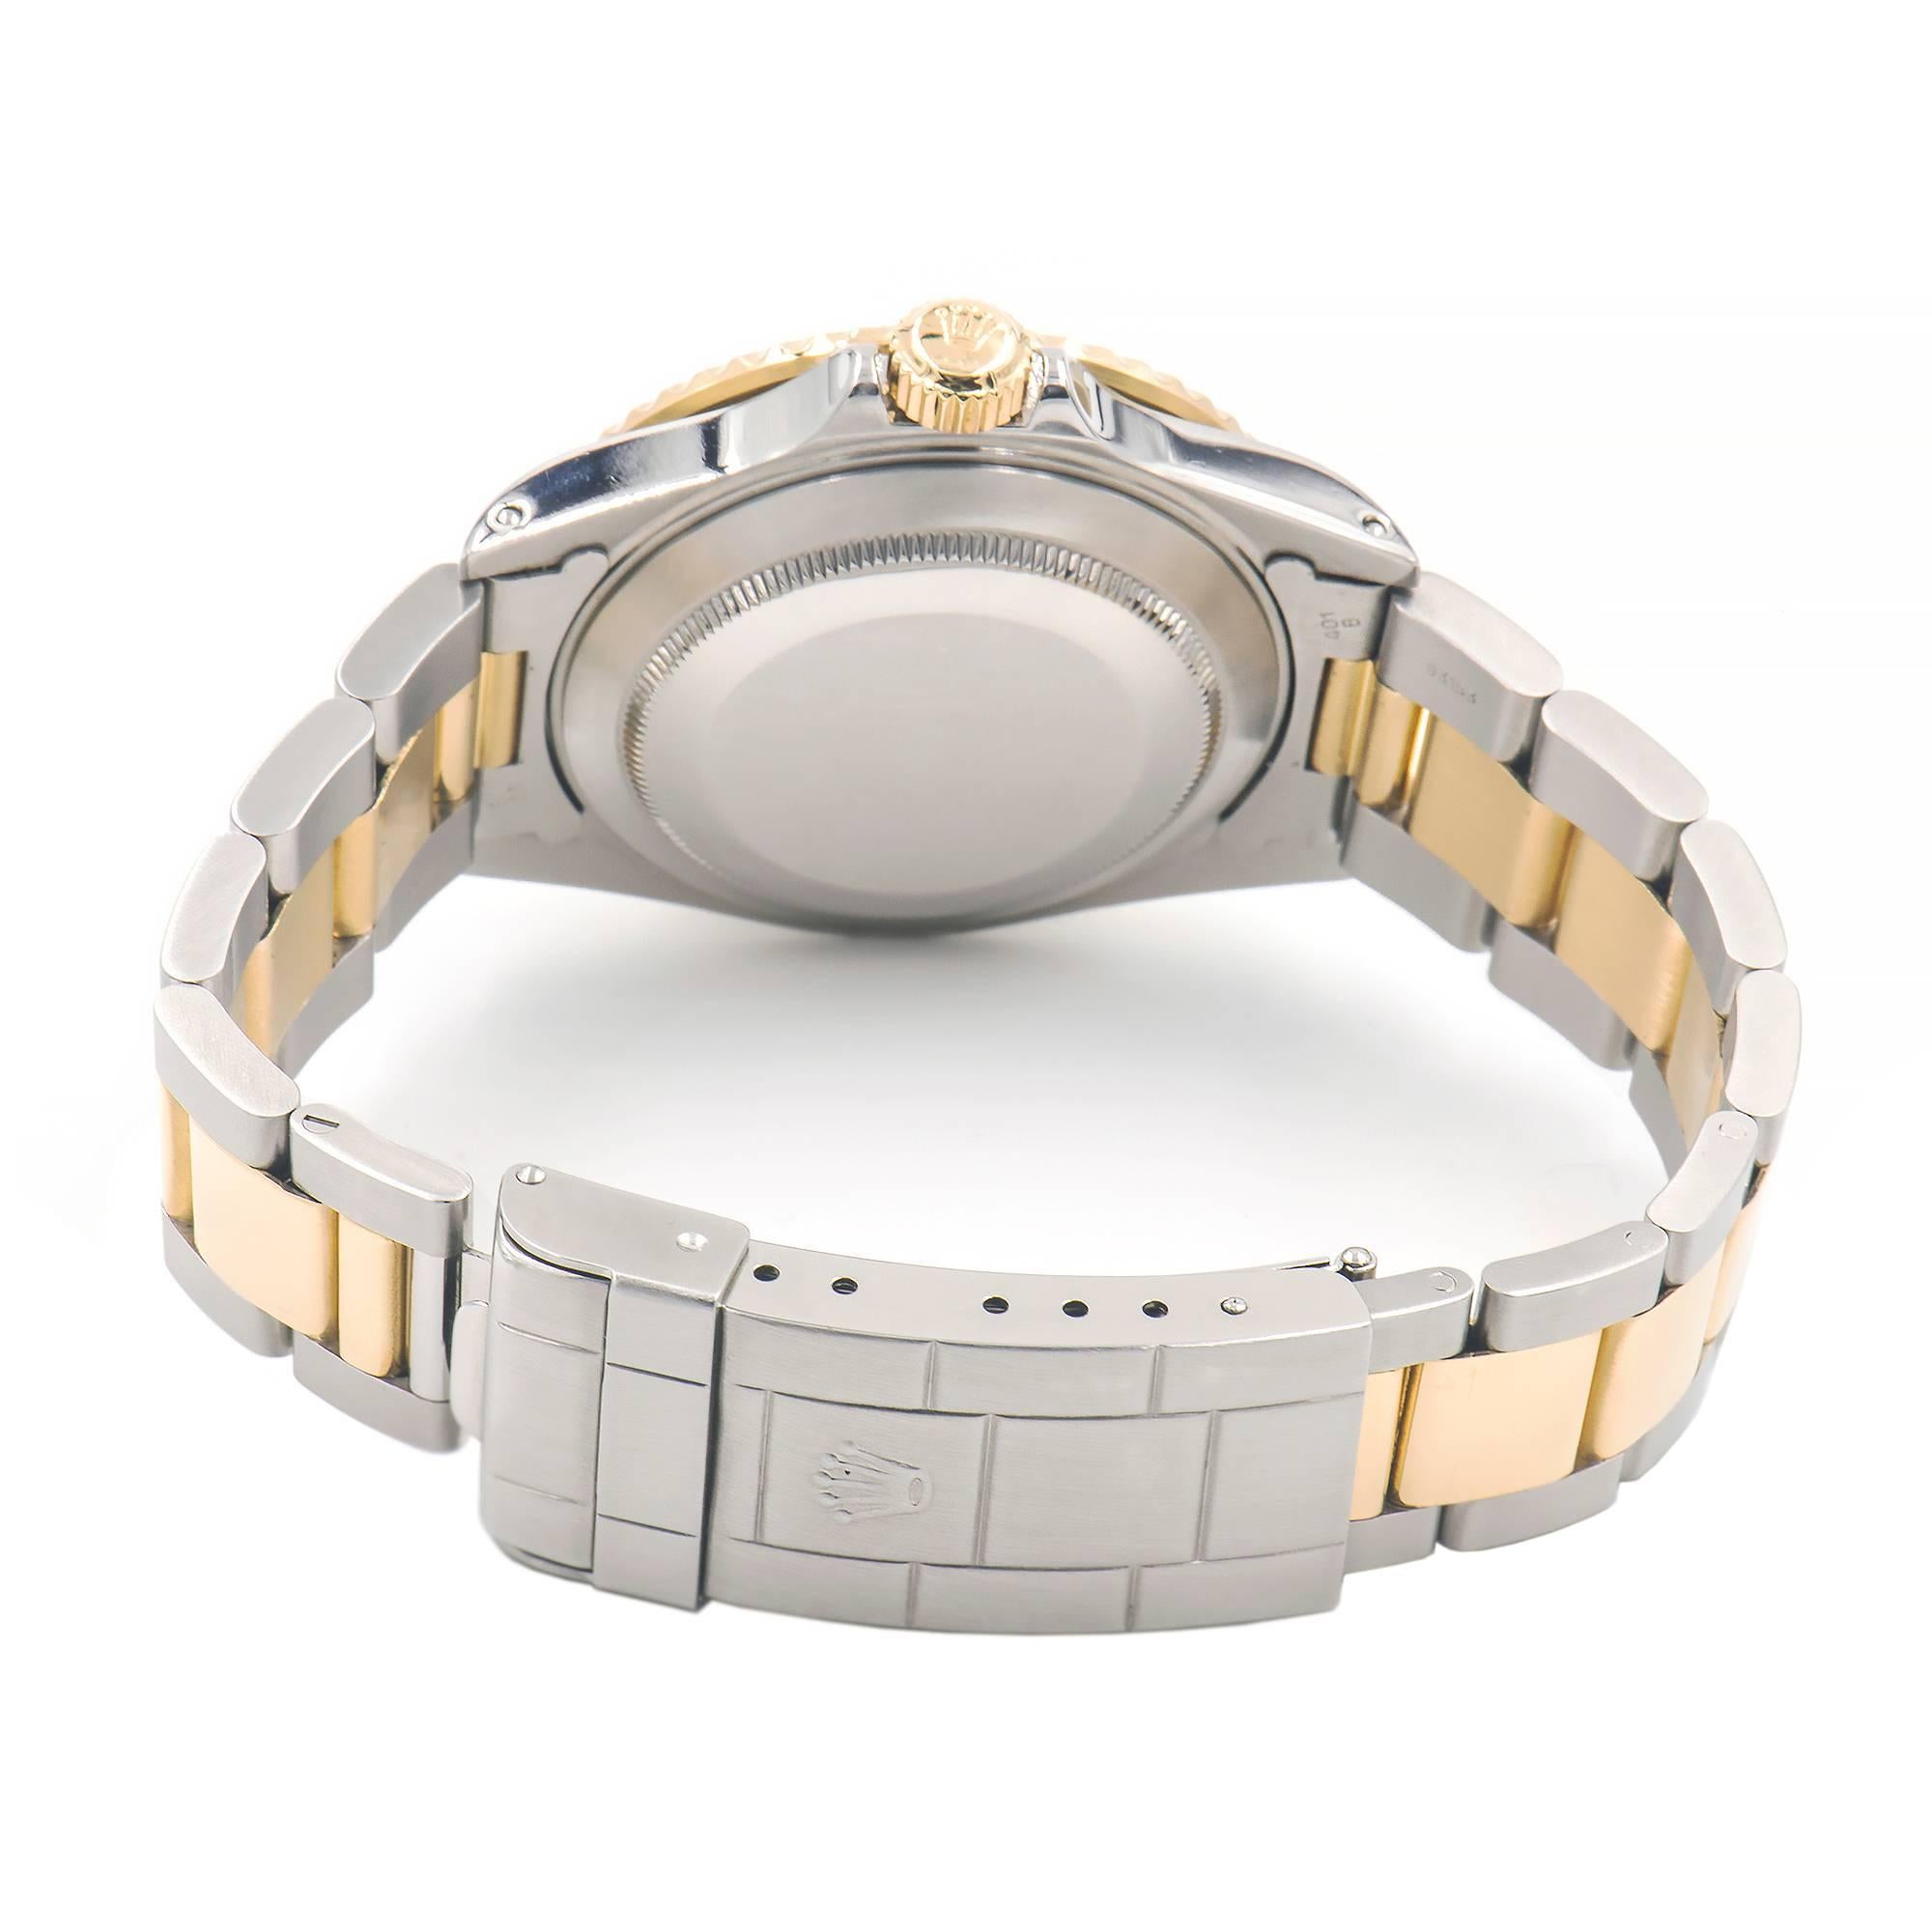 Men's Rolex Gold Stainless Steel Submariner Perpetual Date Wristwatch Ref 16613